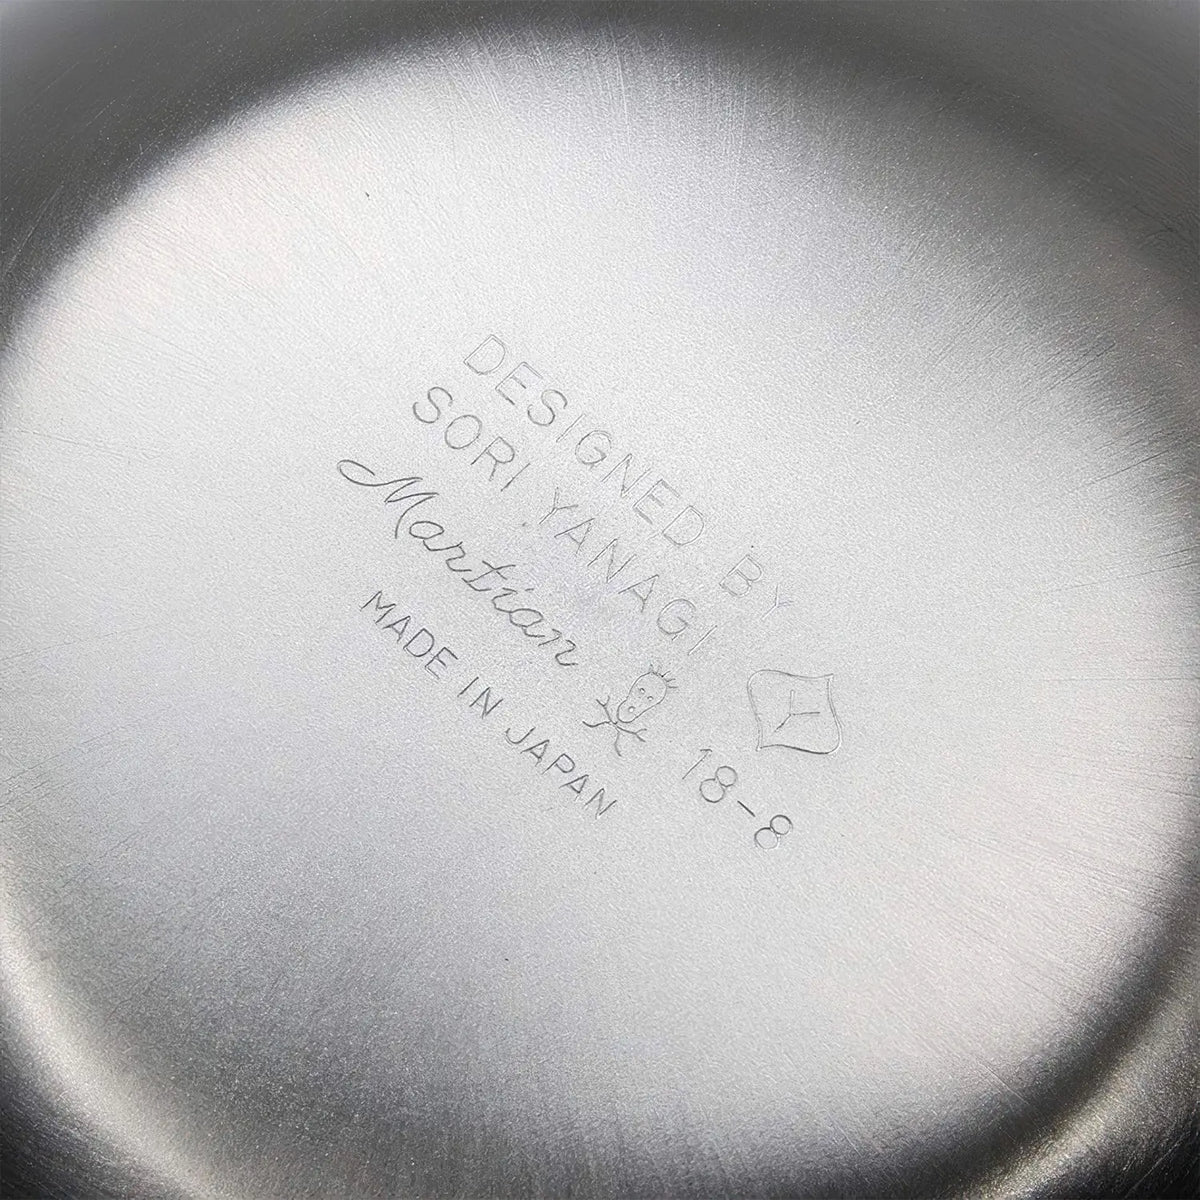 Stainless Steel Mixing Bowls by Sori Yanagi – TENZO